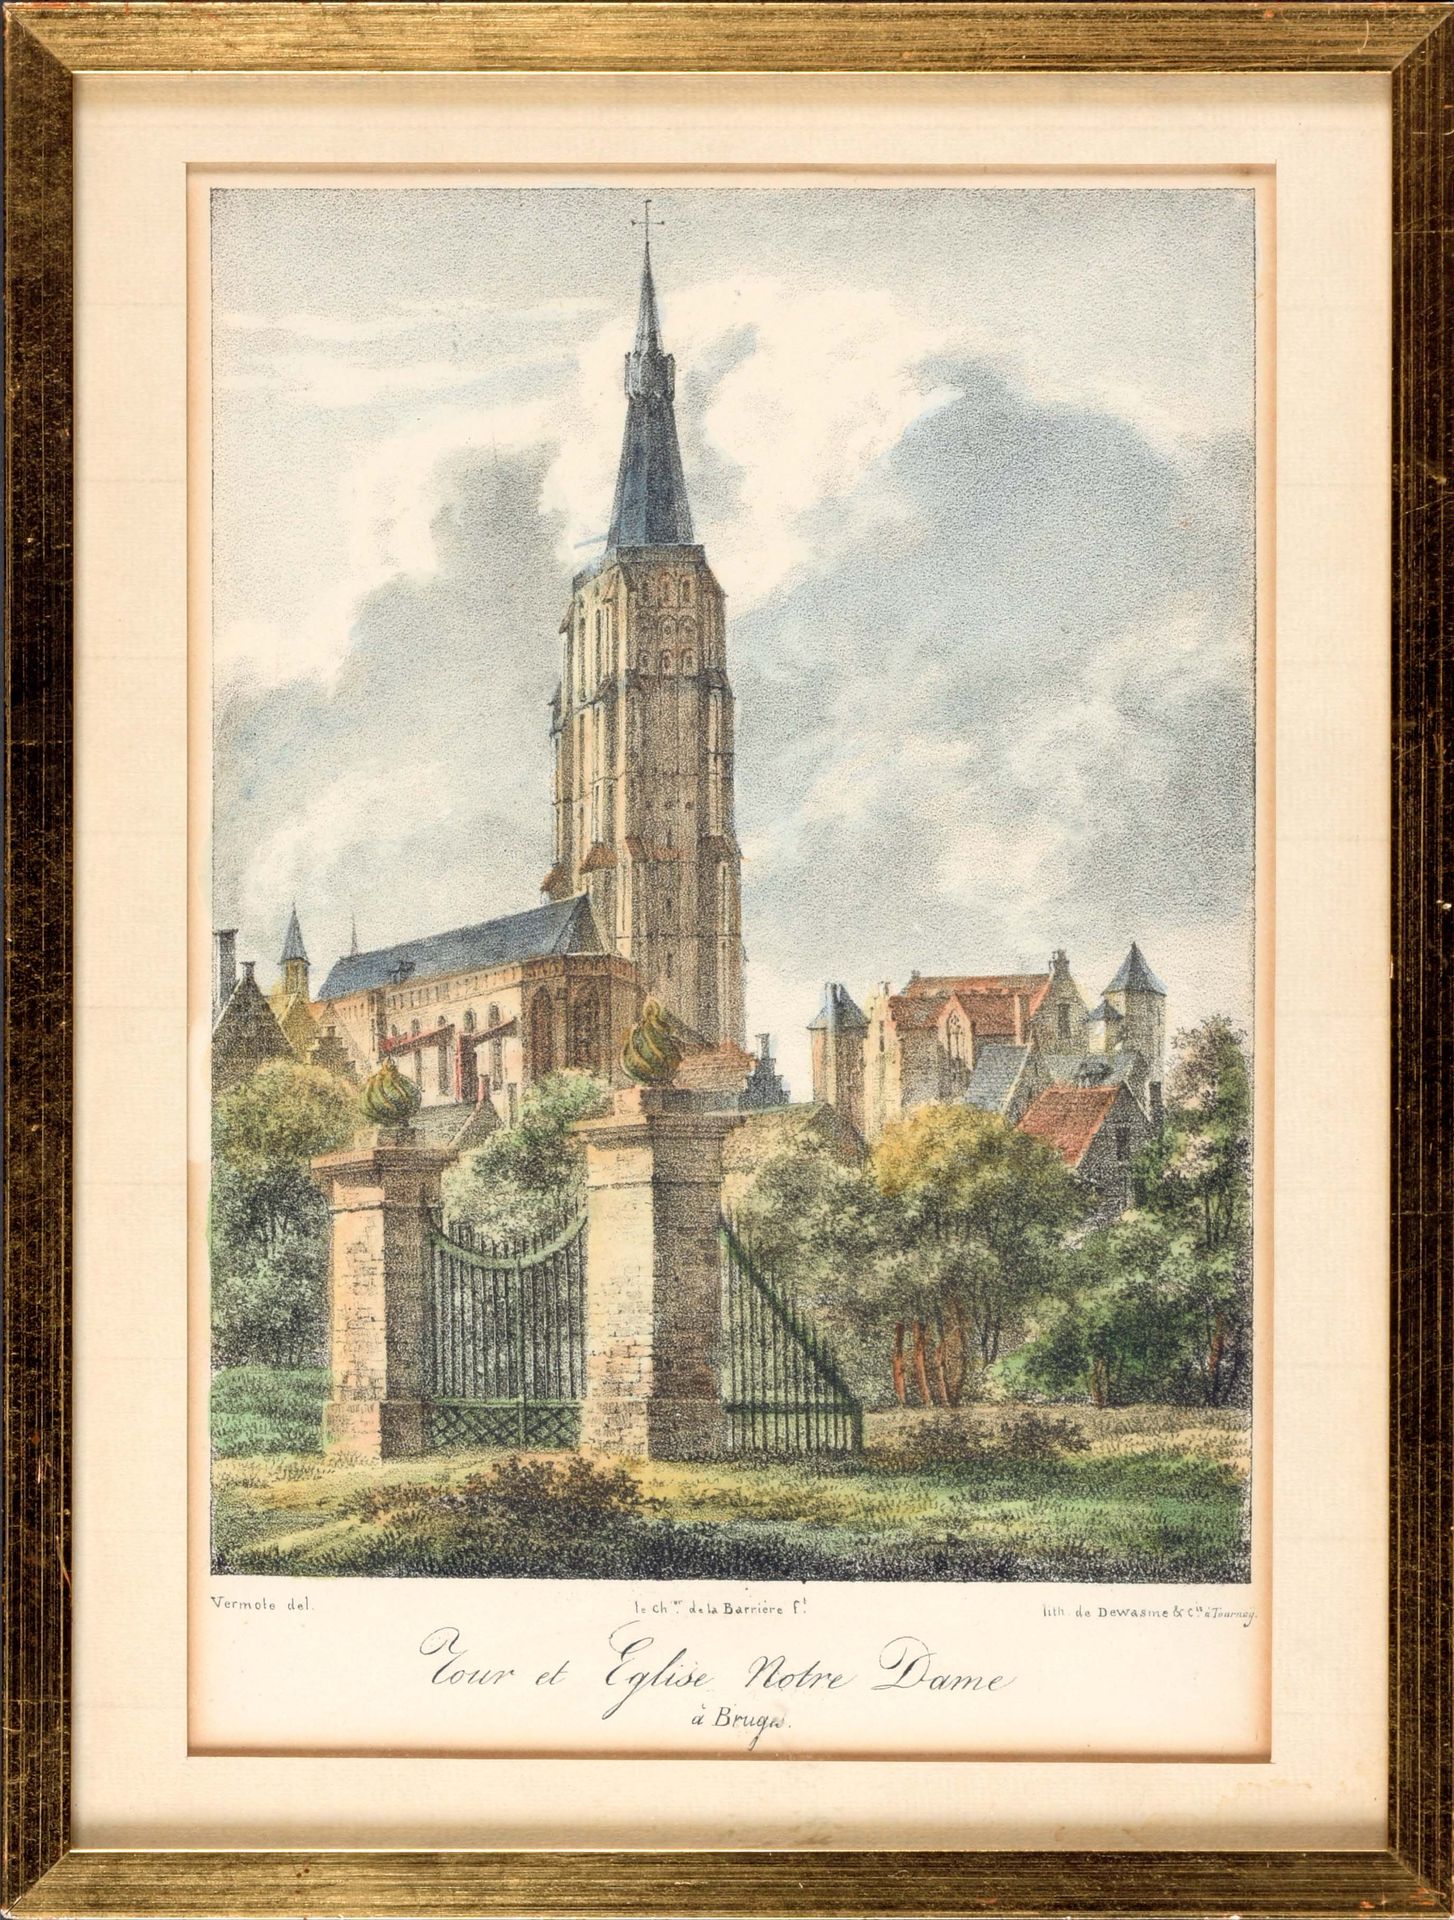 [Brugge] 布鲁日的塔和圣母教堂

平版印刷（23 x 16厘米），手绘（Tournay，Dewasme，约1820年），制作。参考文献：Michiels&hellip;